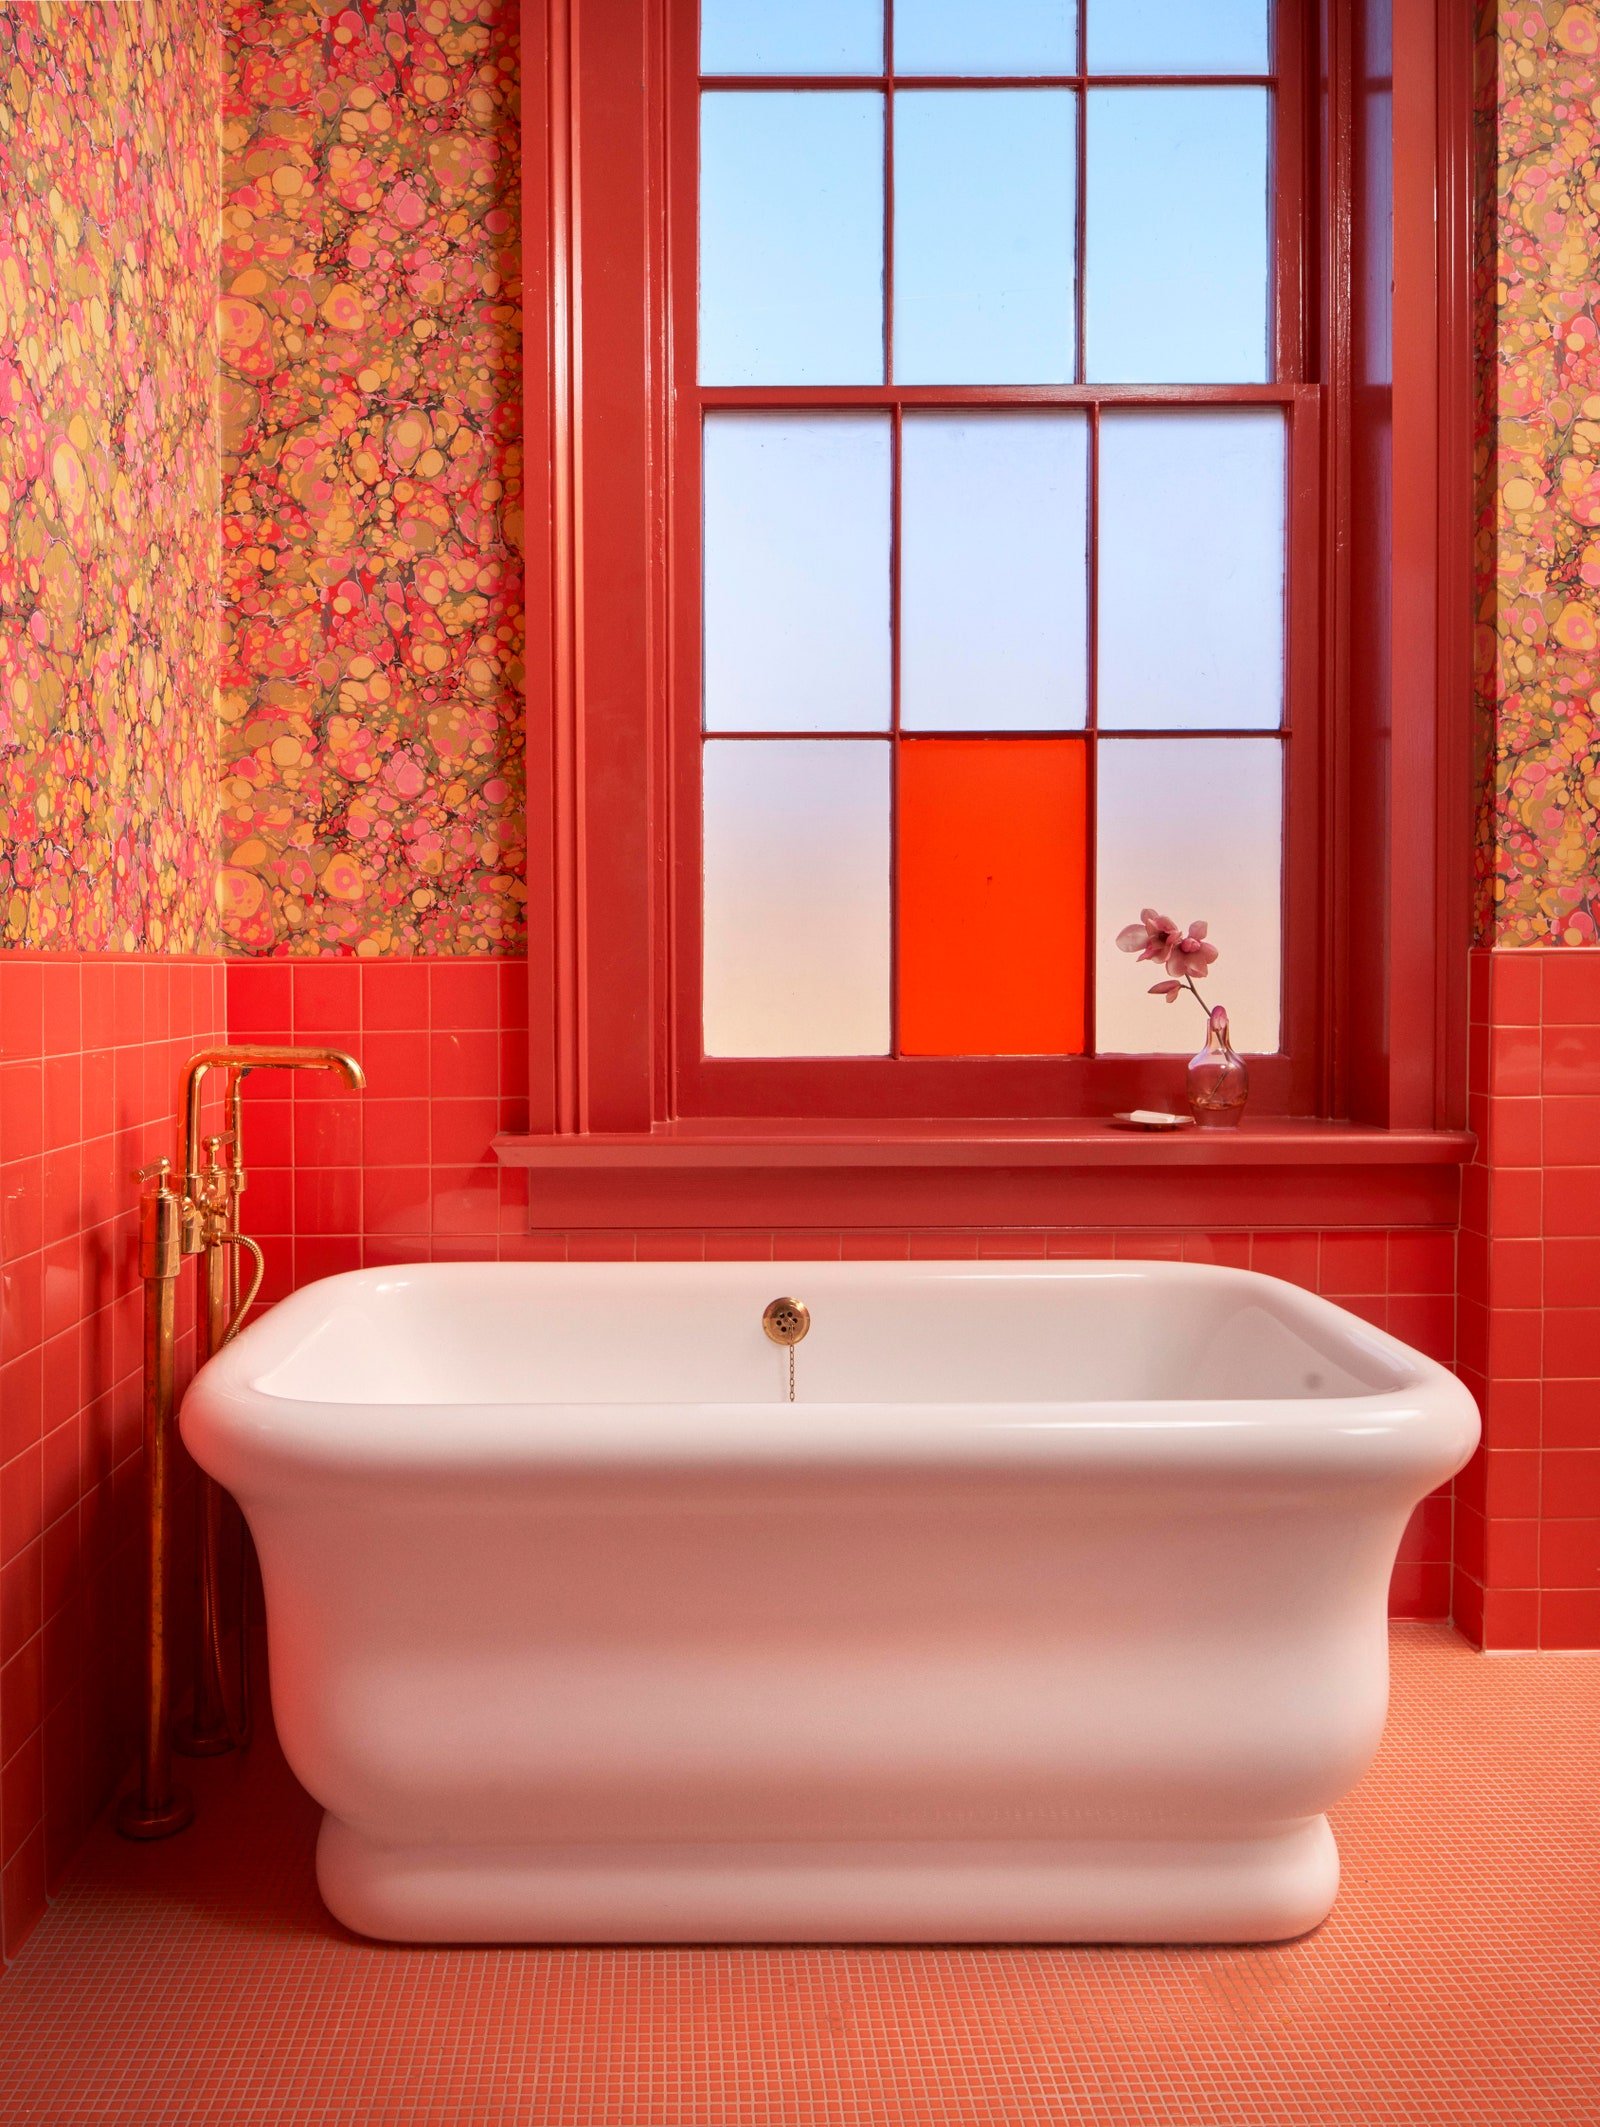 Hotel Saint Vincent - Room x Bathroom 01 - by Nick Simonite.jpg